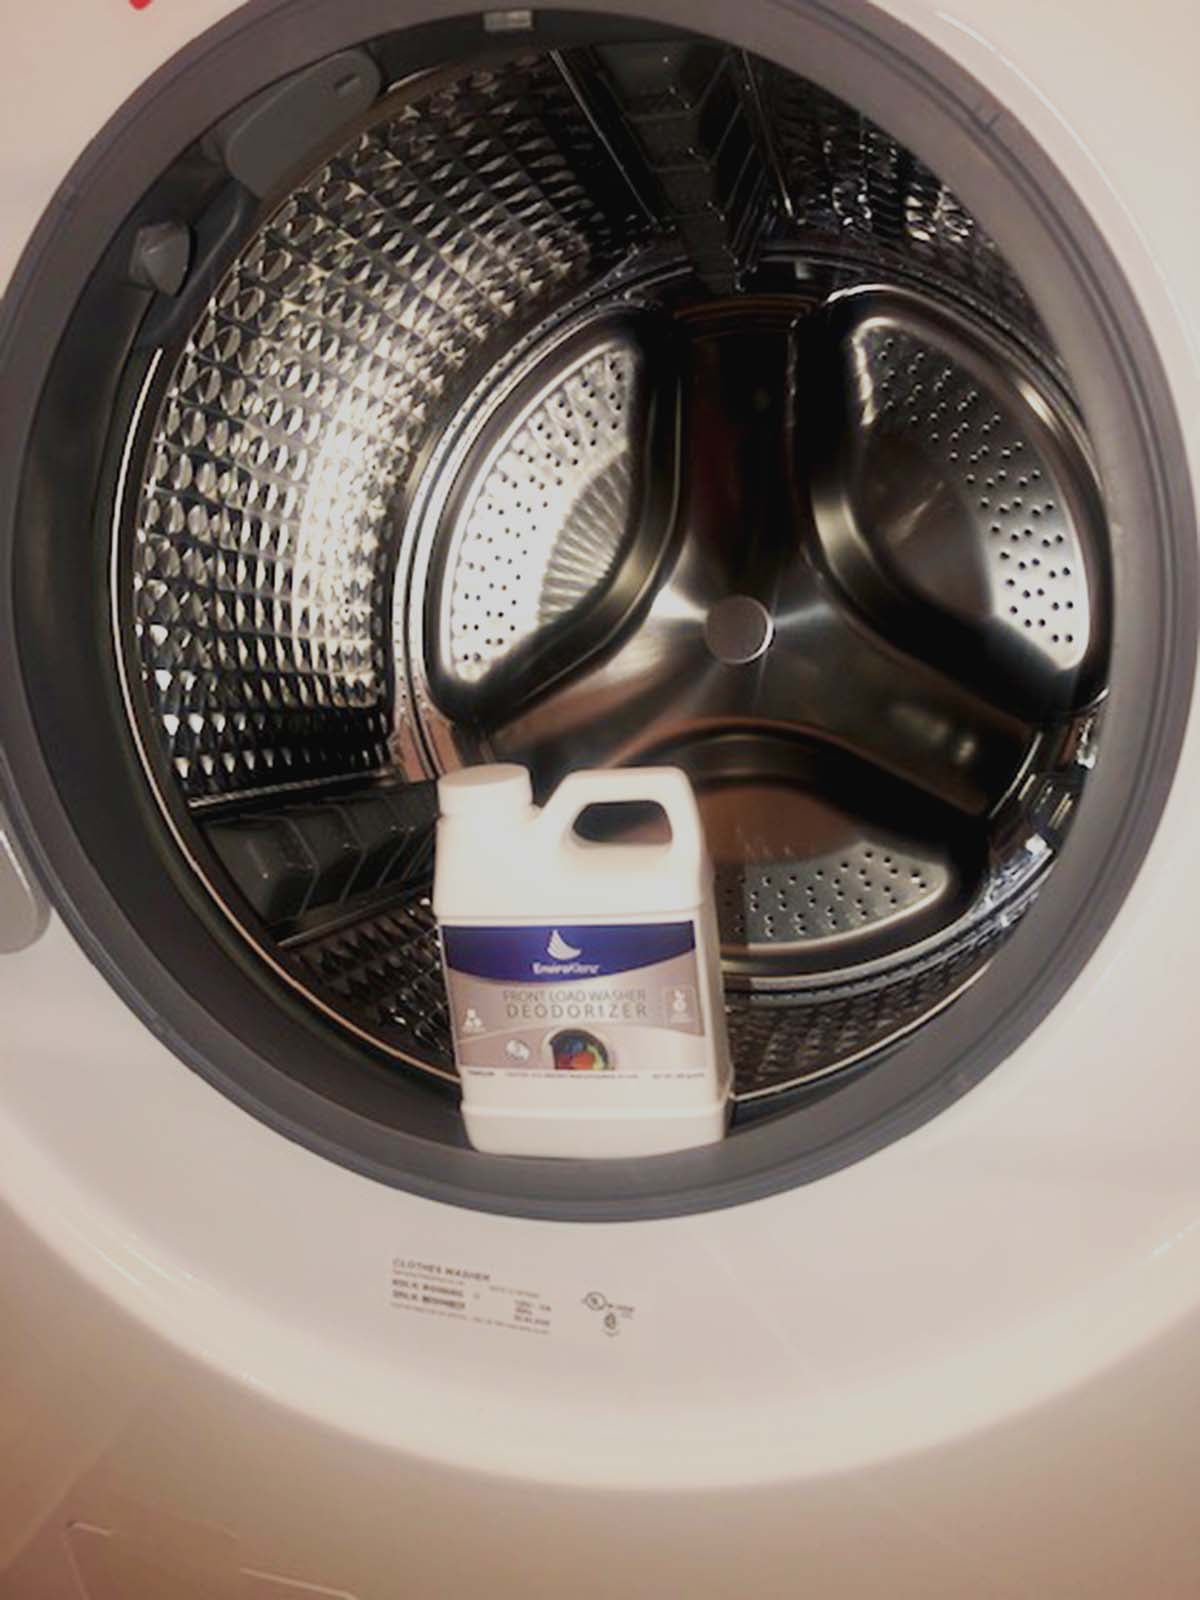 EnviroKlenz Front Load Washer Deodorizer Washing Machine Cleaner - 3 Uses